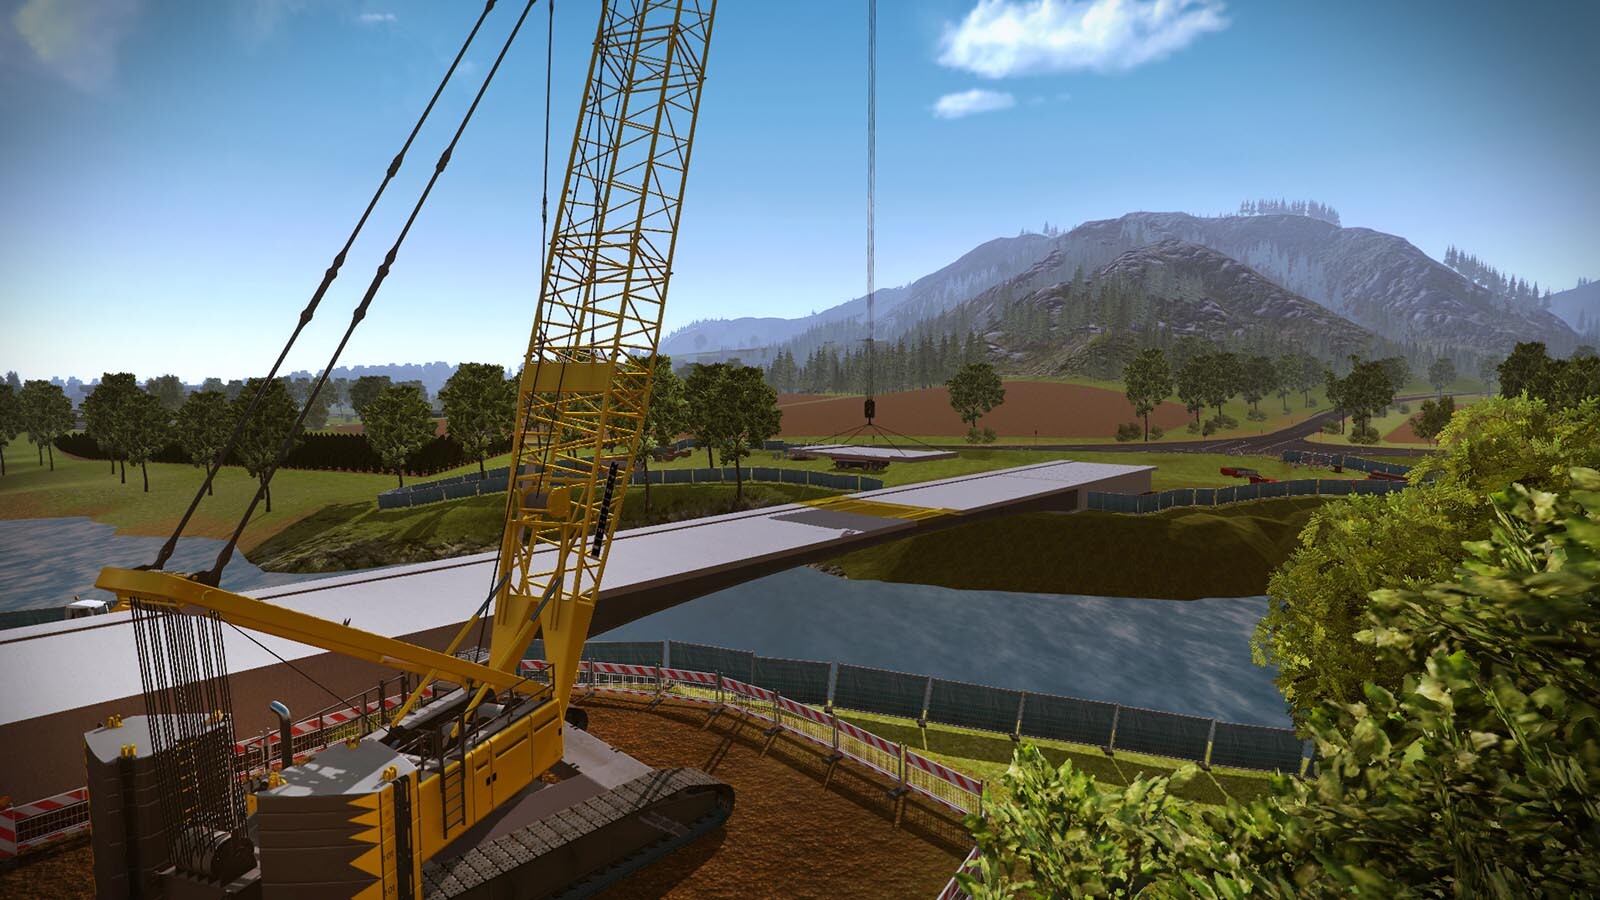 construction simulator 2015 product key